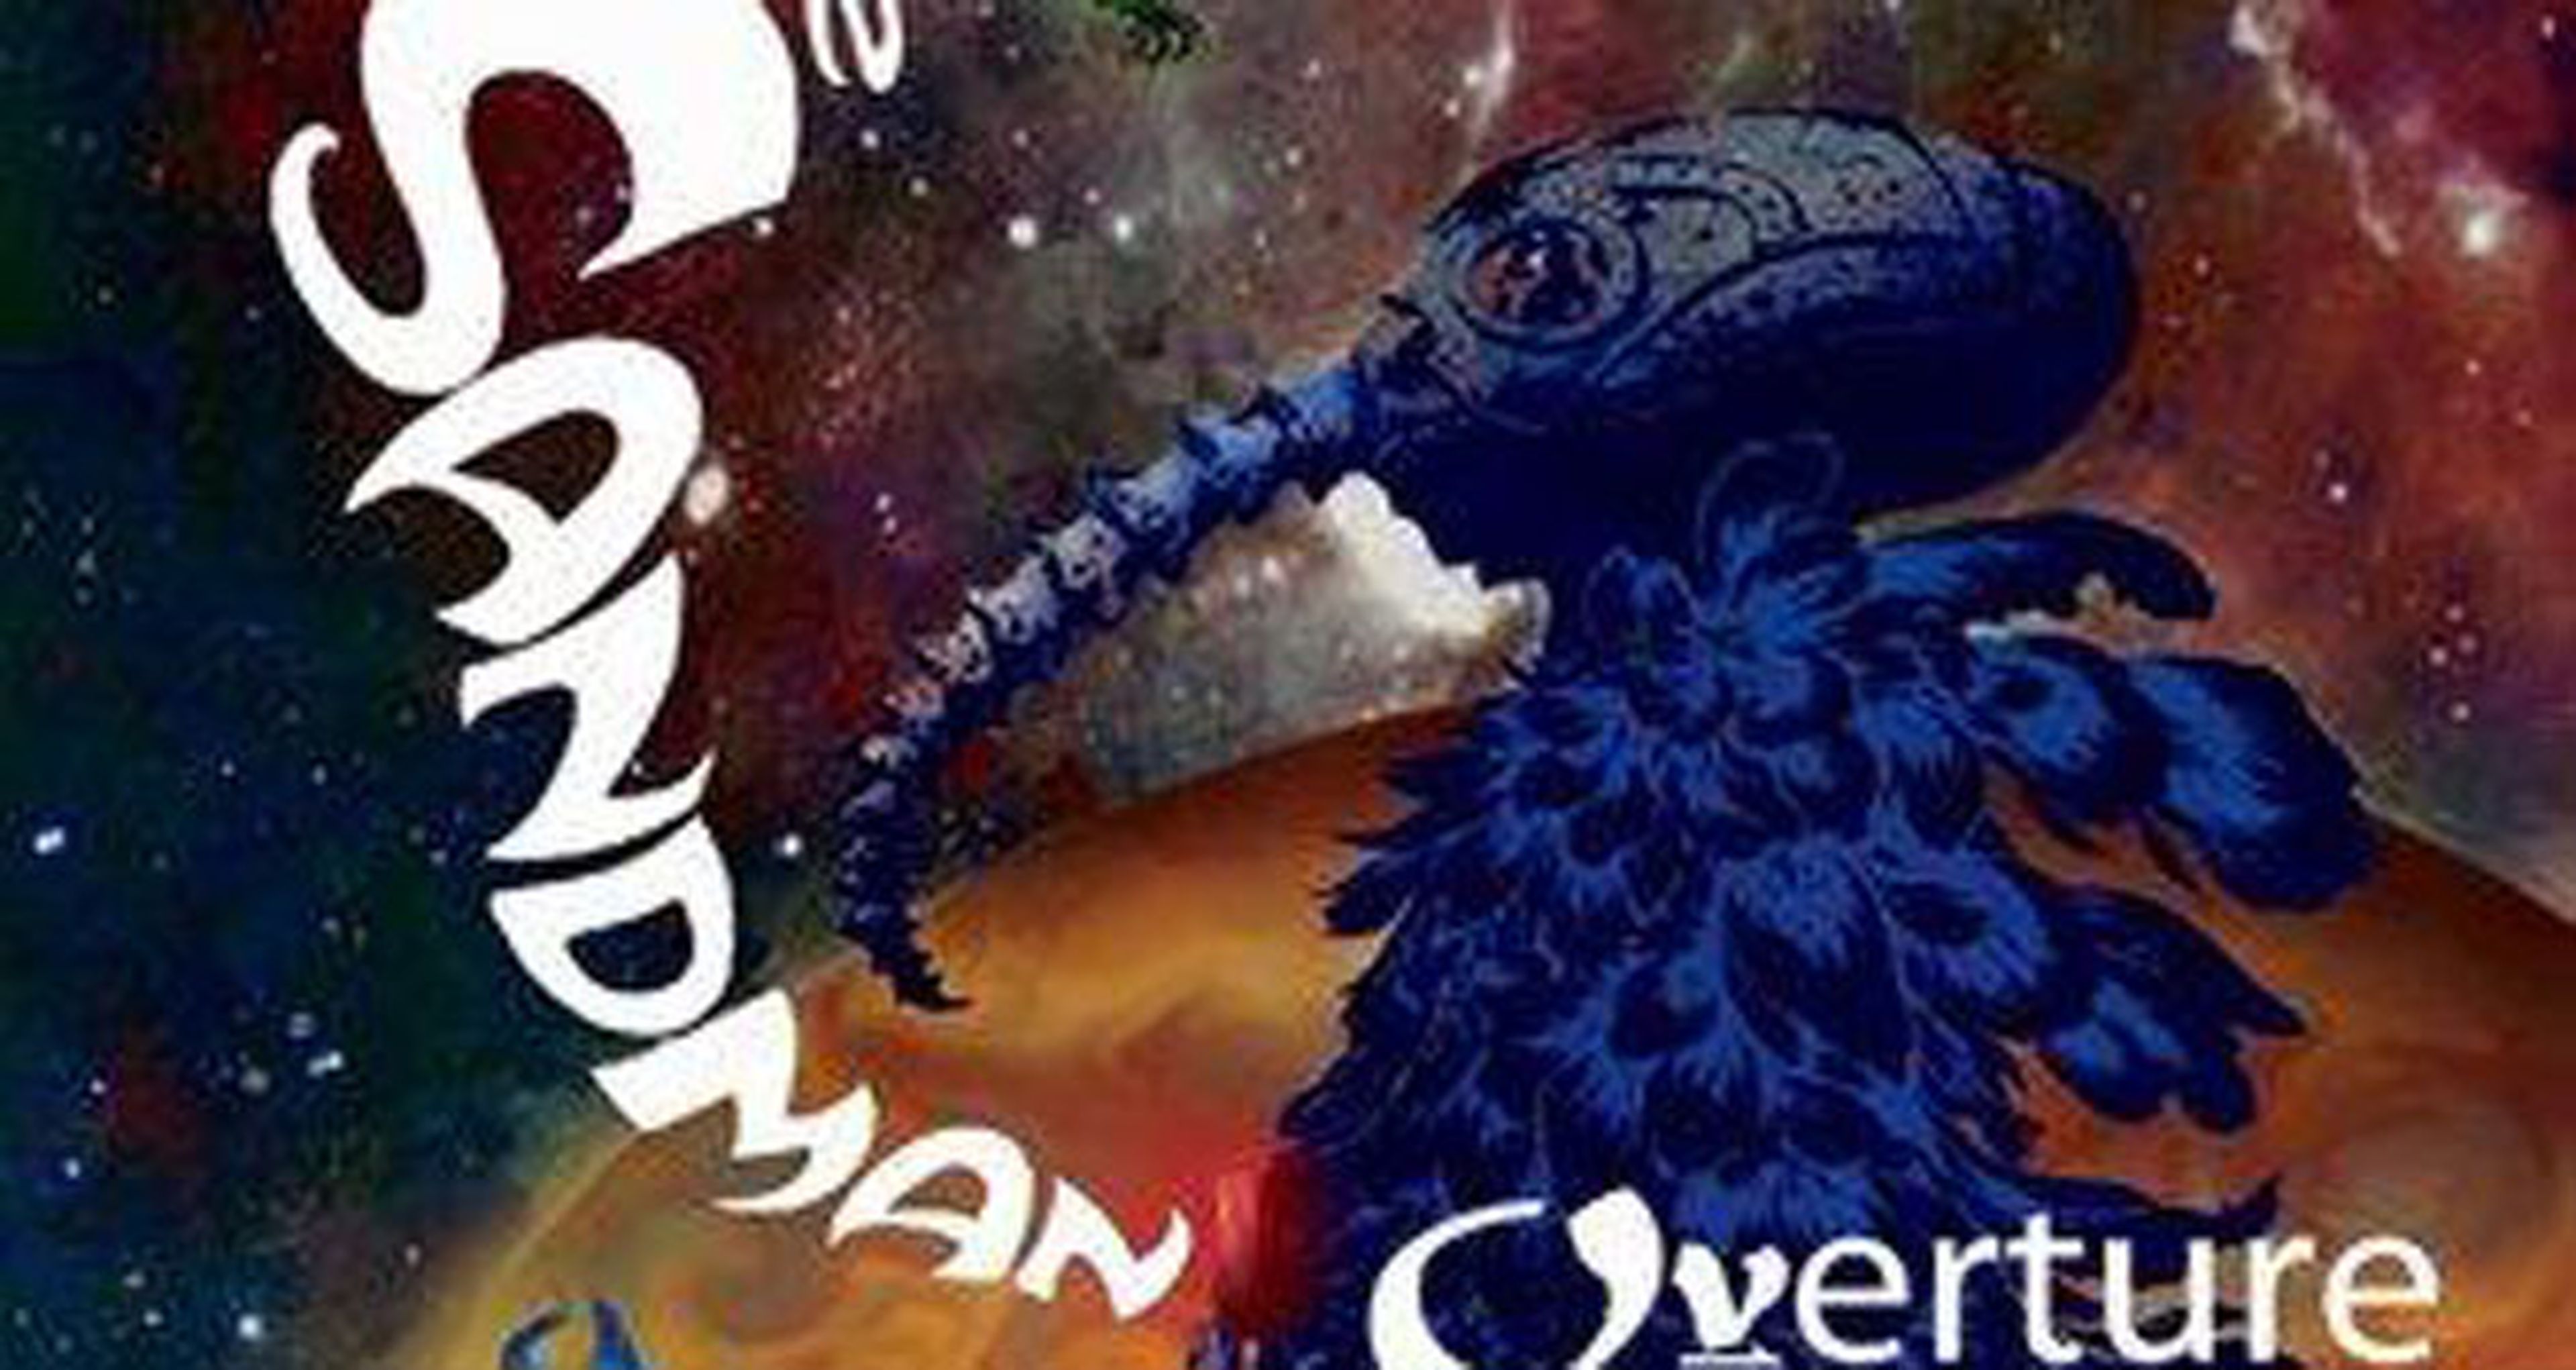 The Sandman: Overture de Neil Gaiman ya tiene fecha